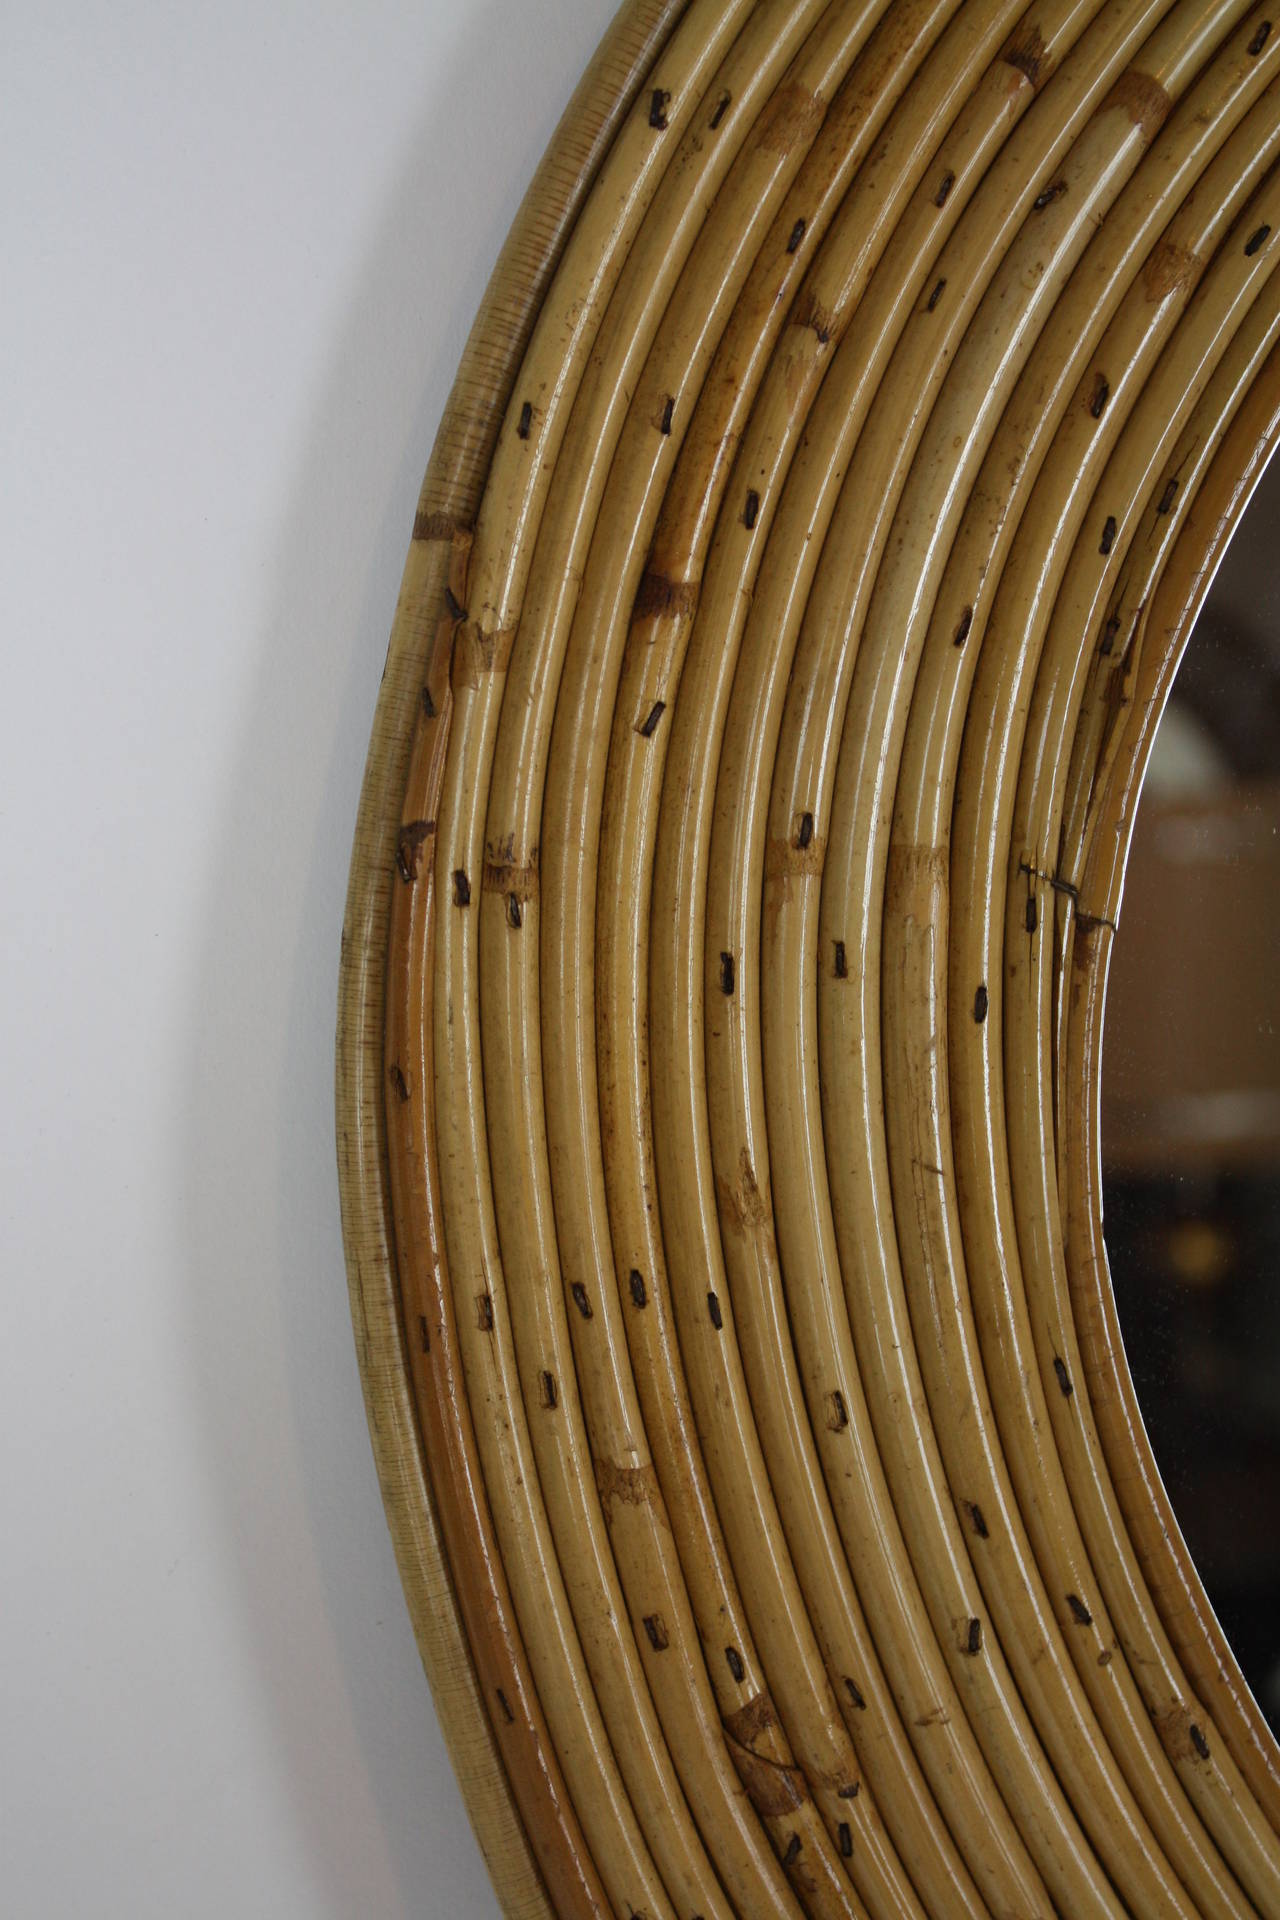 Spanish wicker cane circular mirror